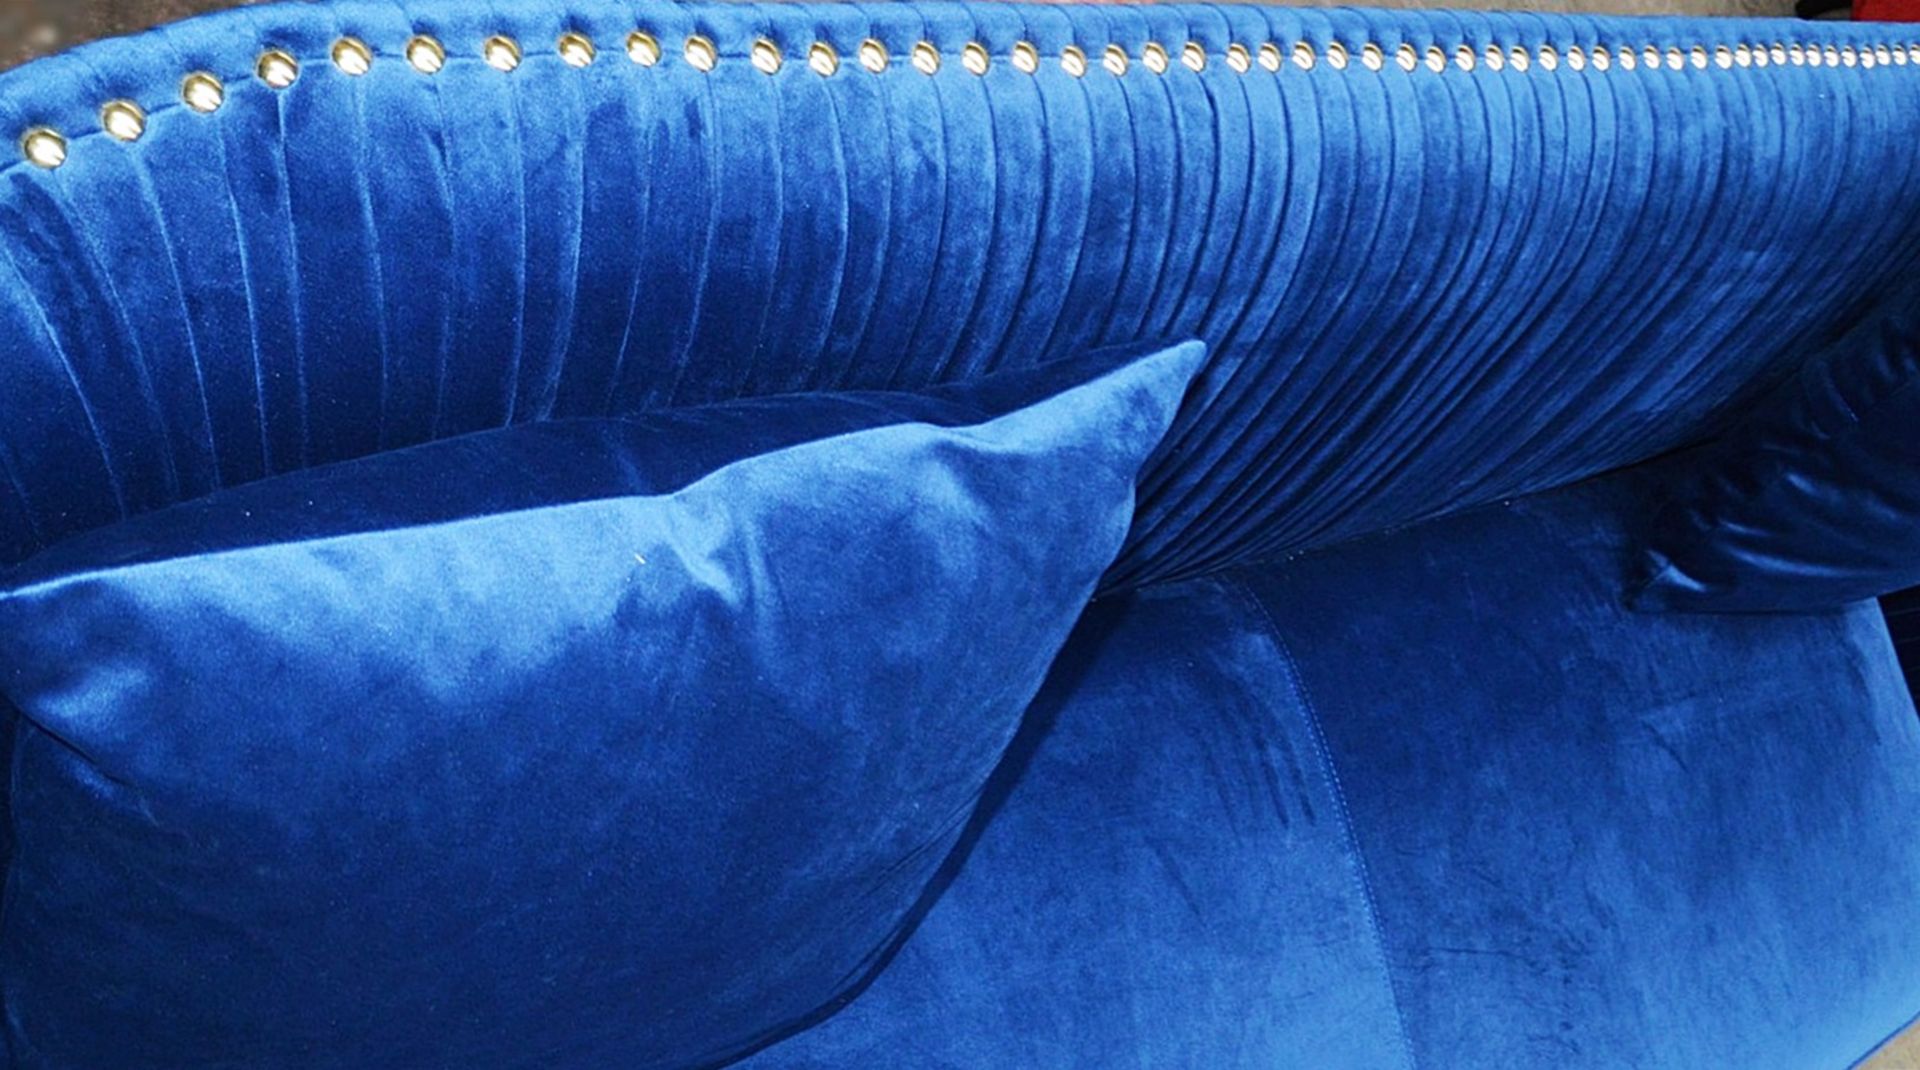 1 x Bespoke Blue Velvet Button-Back Sofa In A Rich Royal Blue Velvet With Detailing In Gold - Image 8 of 8